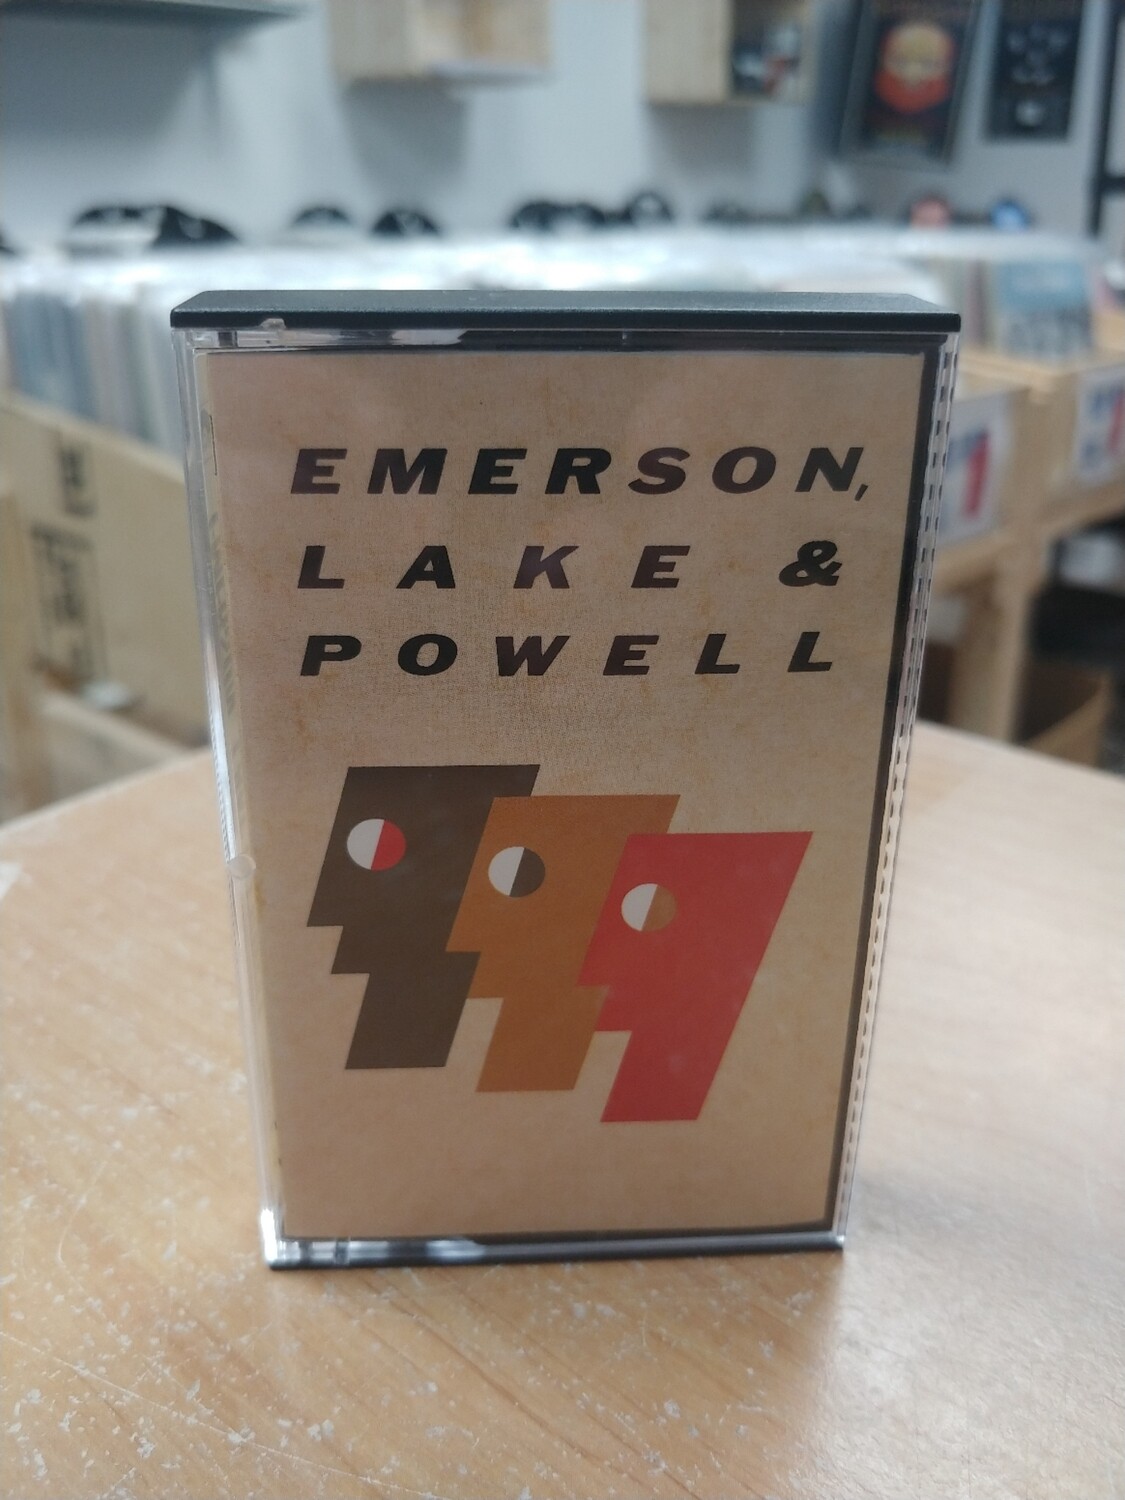 Emerson Lake Powell - Emerson Lake Powell (CASSETTE)